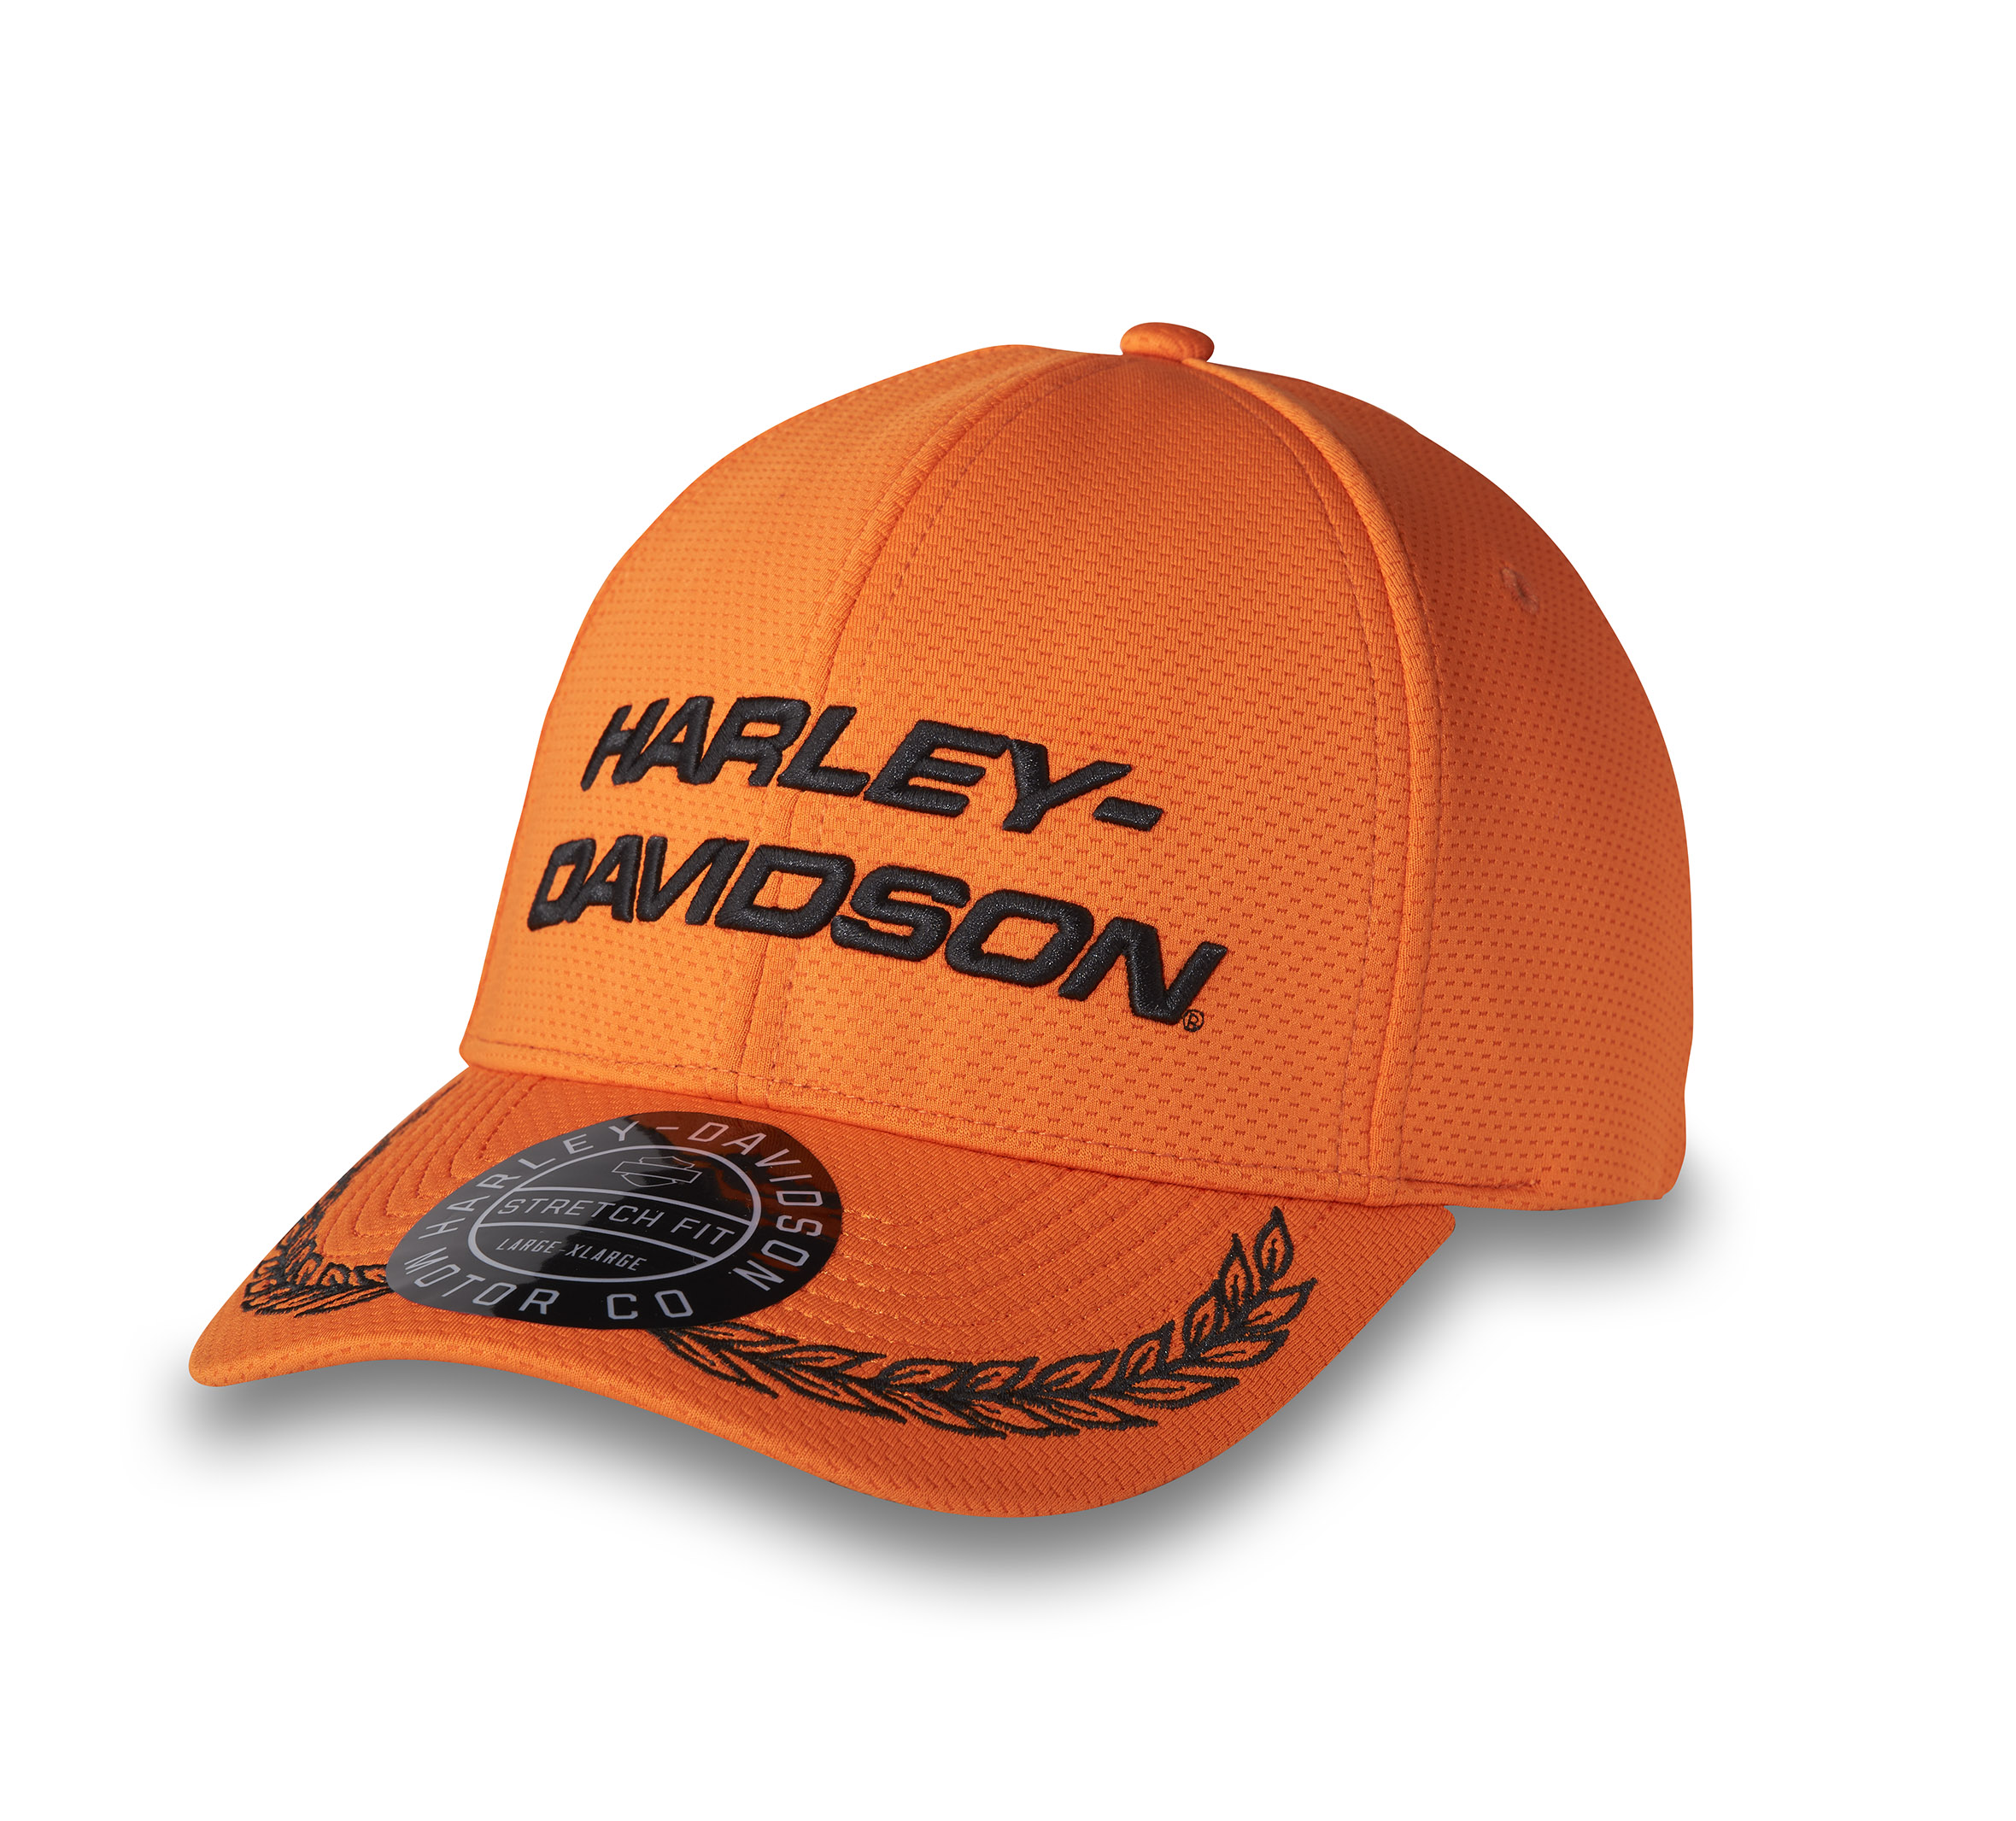 Harley-Davidson Start Your Engines Stretch-Fit Baseball Cap, Harley Orange - Large